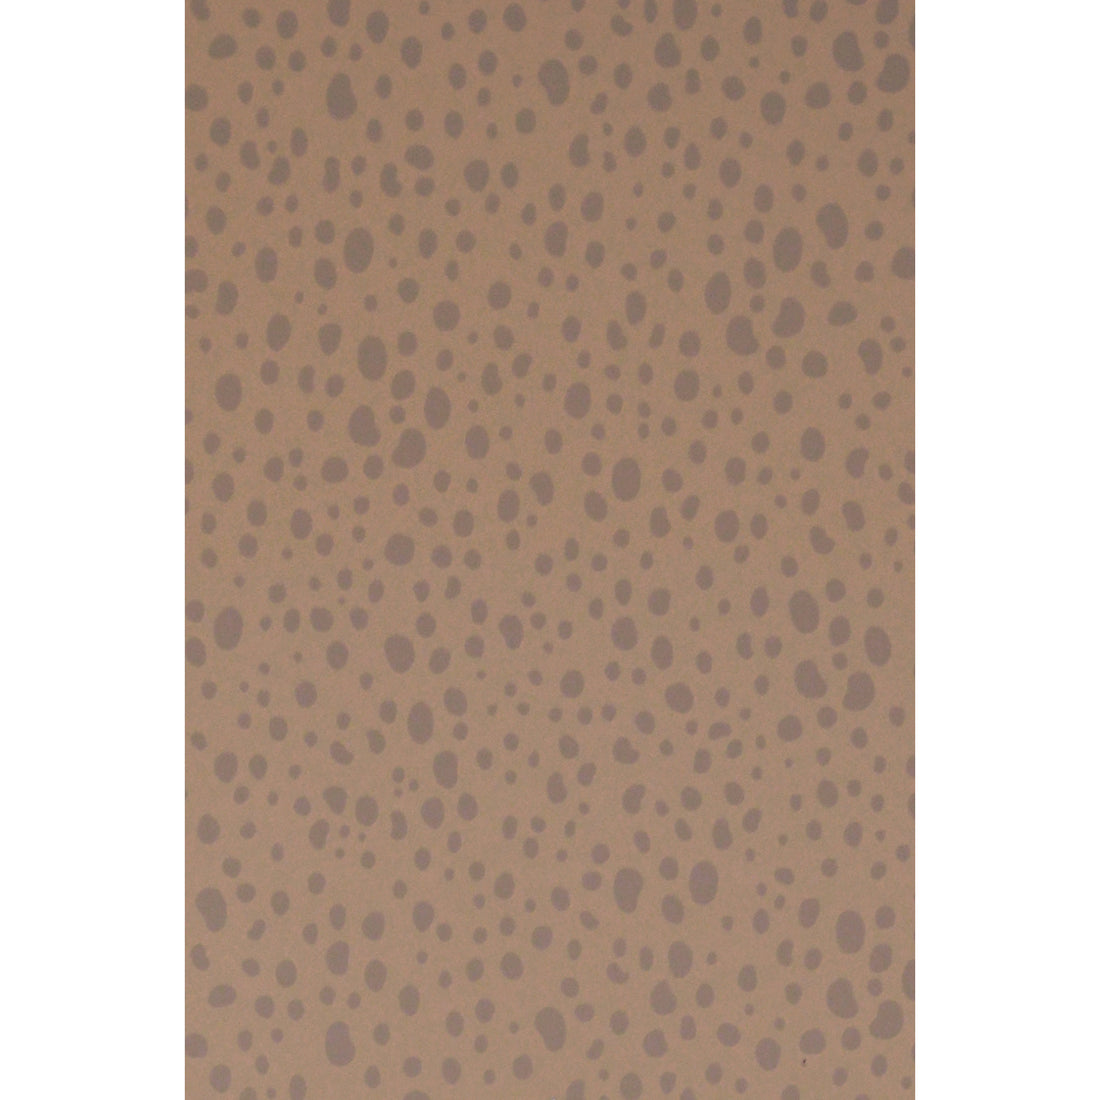 majvillan-wallpaper-animal-dots-soft-brown-majv-142-01- (1)